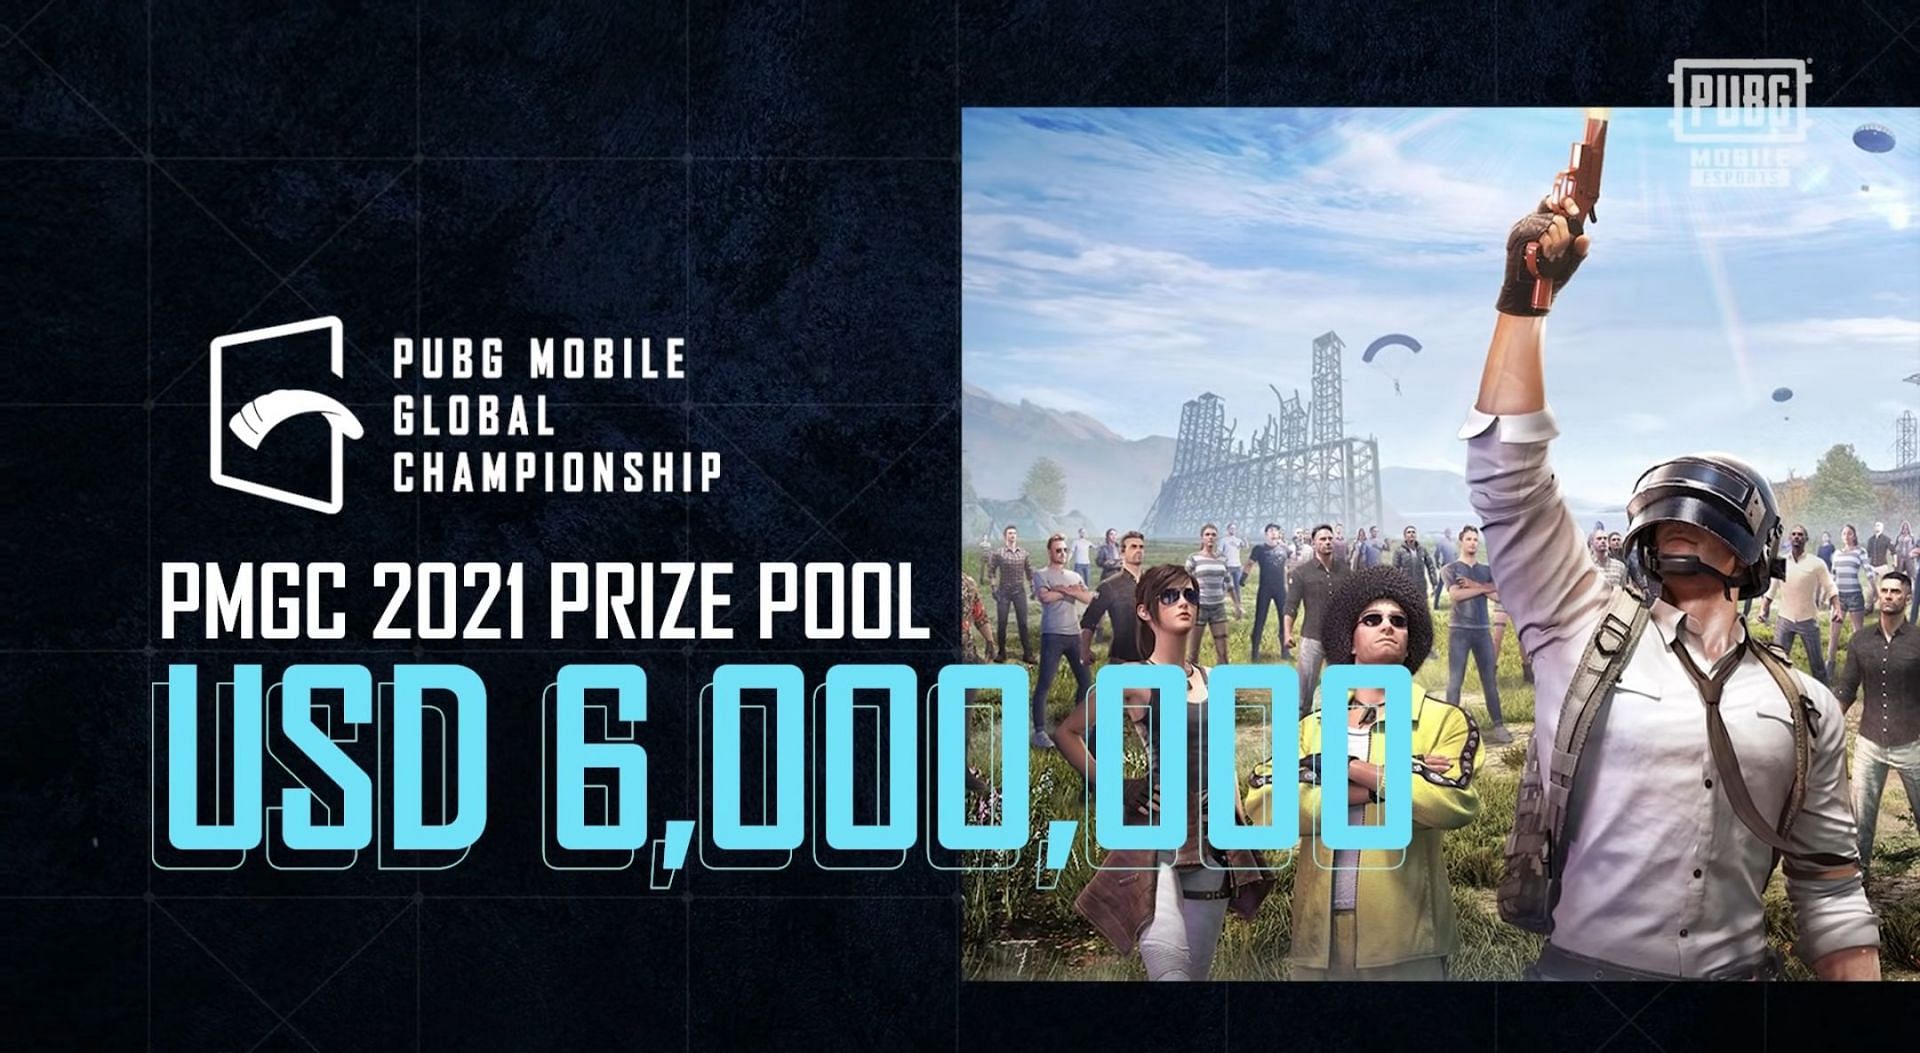 PMGC 2021 features a massive prize pool of 6 million USD (Image via PUBG Mobile)